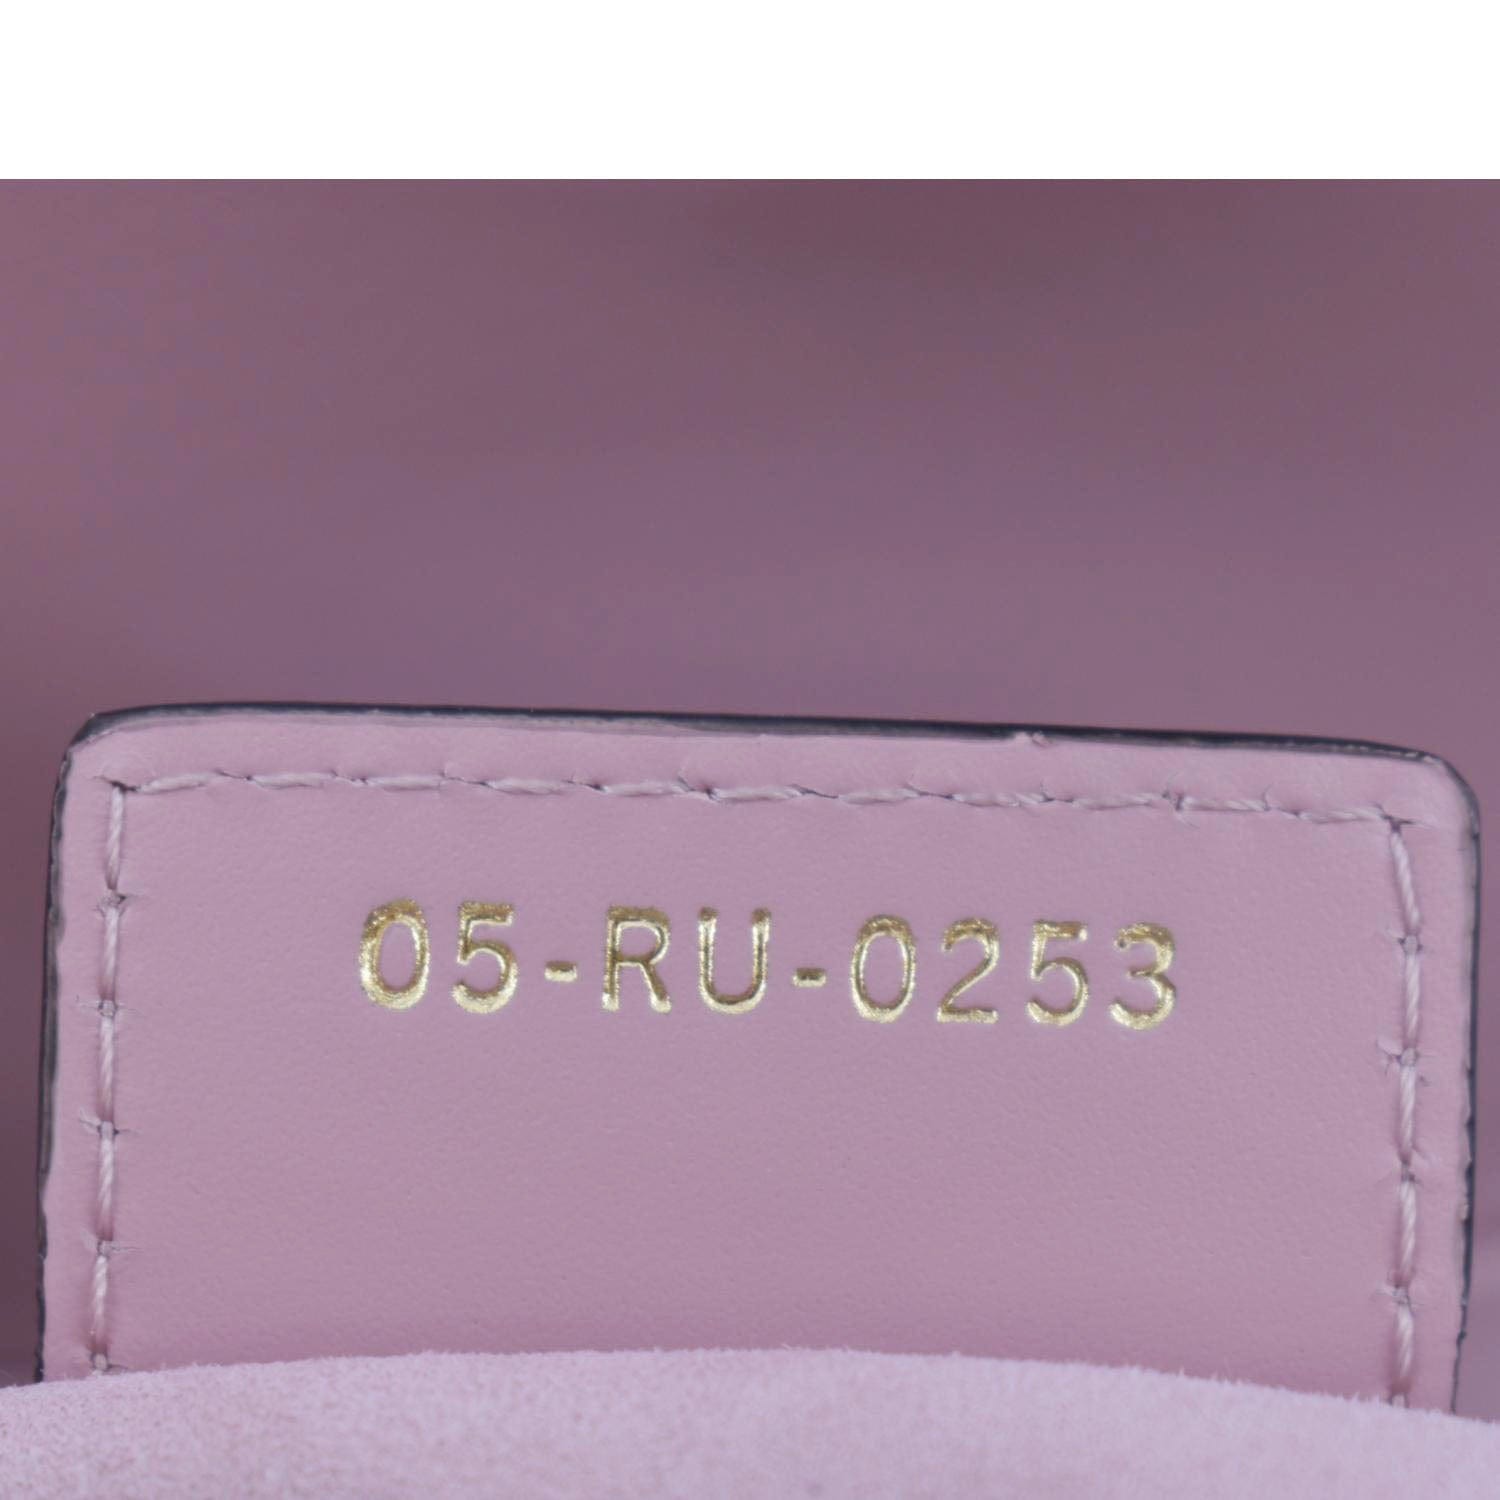 Dior - Saddle Bag with Strap Antique Pink Smooth Calfskin - Women